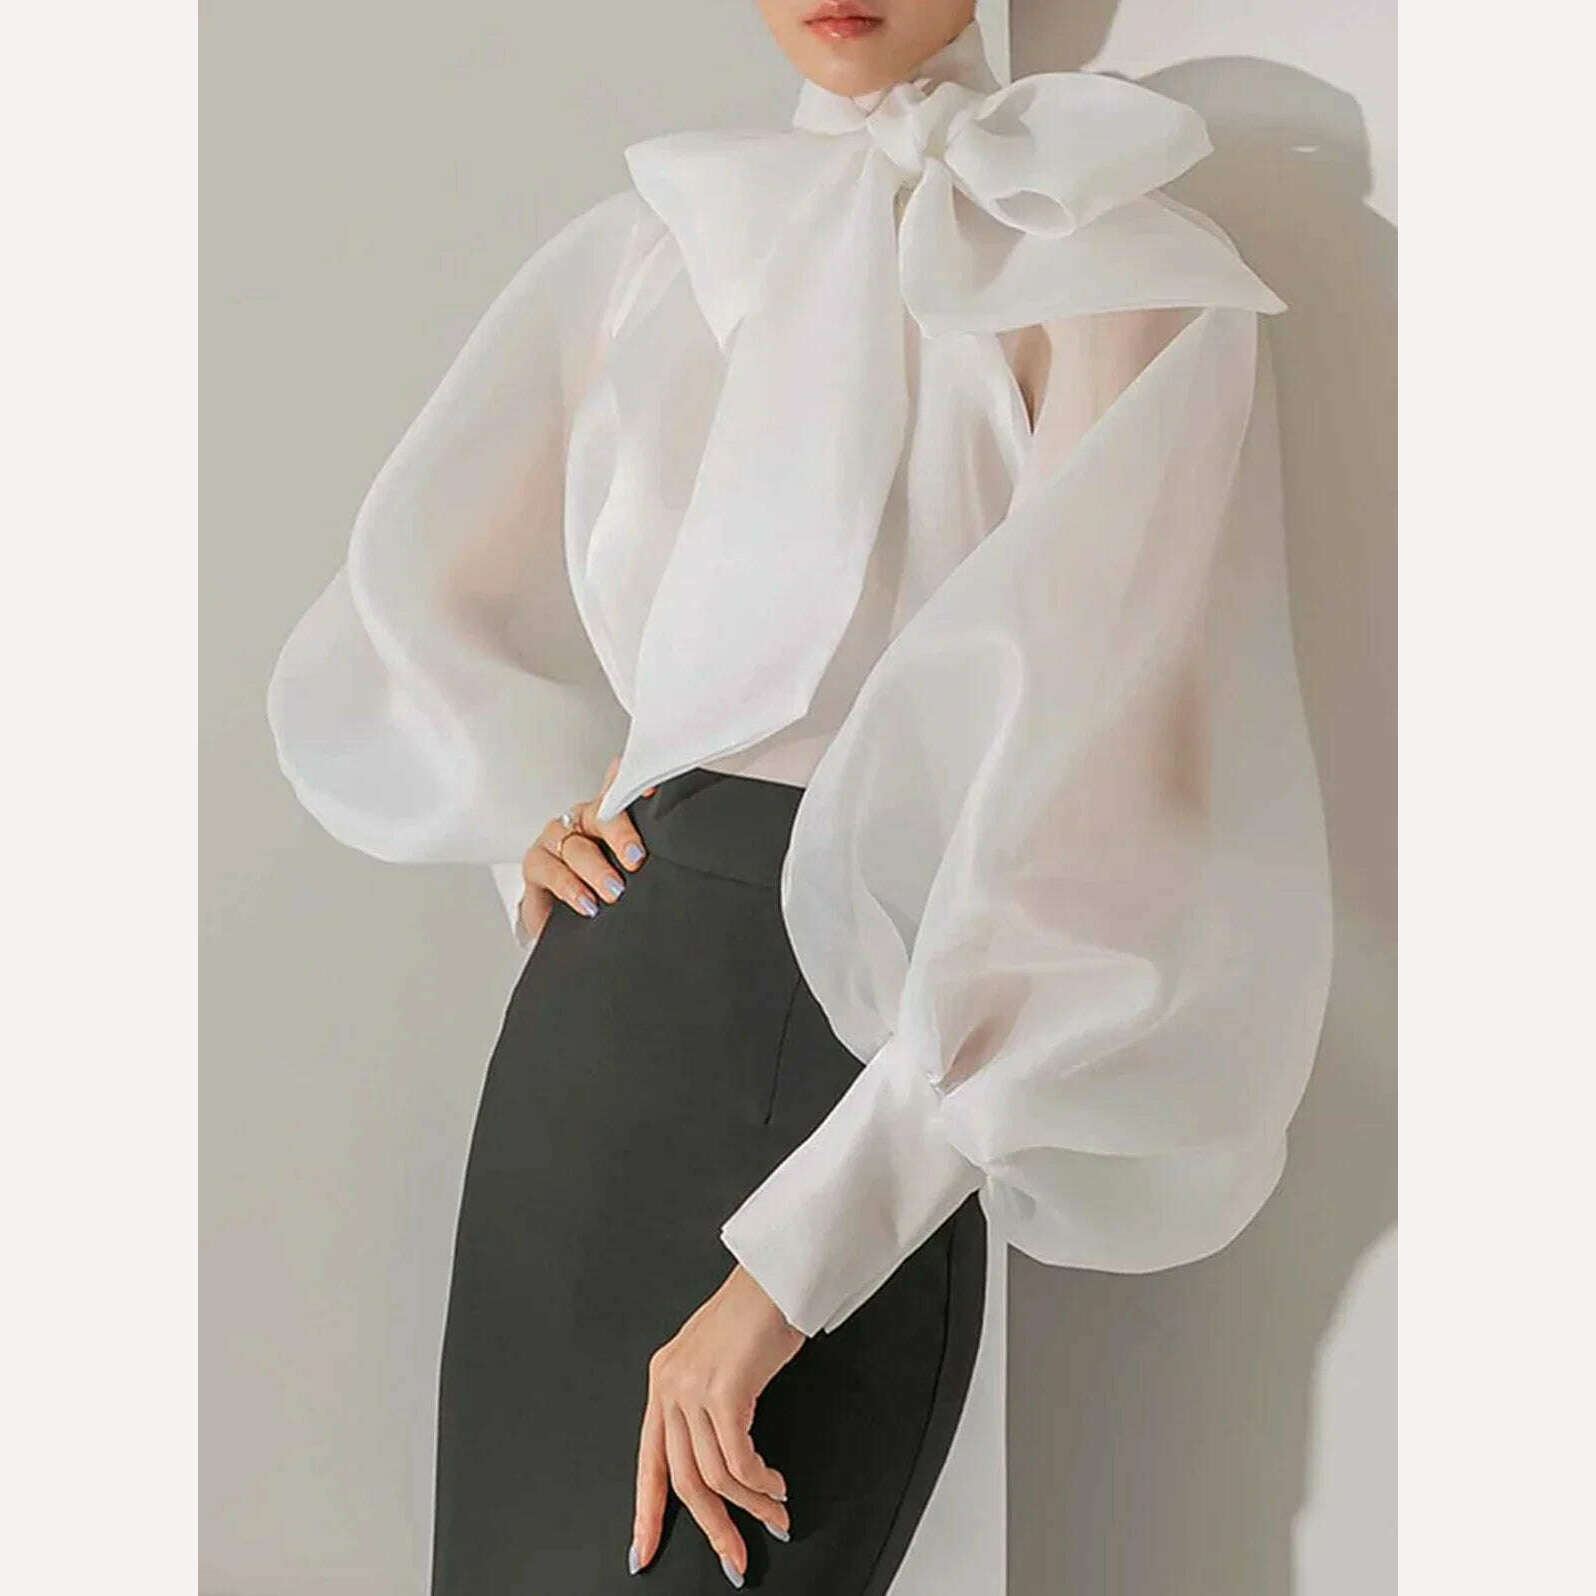 KIMLUD, Women's Elegant Lantern Sleeve Shirt Chiffon Transparent Long Sleeve Sweet Lace-up Neck Polk Dot Casual Fashion Autumn Shirts, White / M / CHINA, KIMLUD Women's Clothes